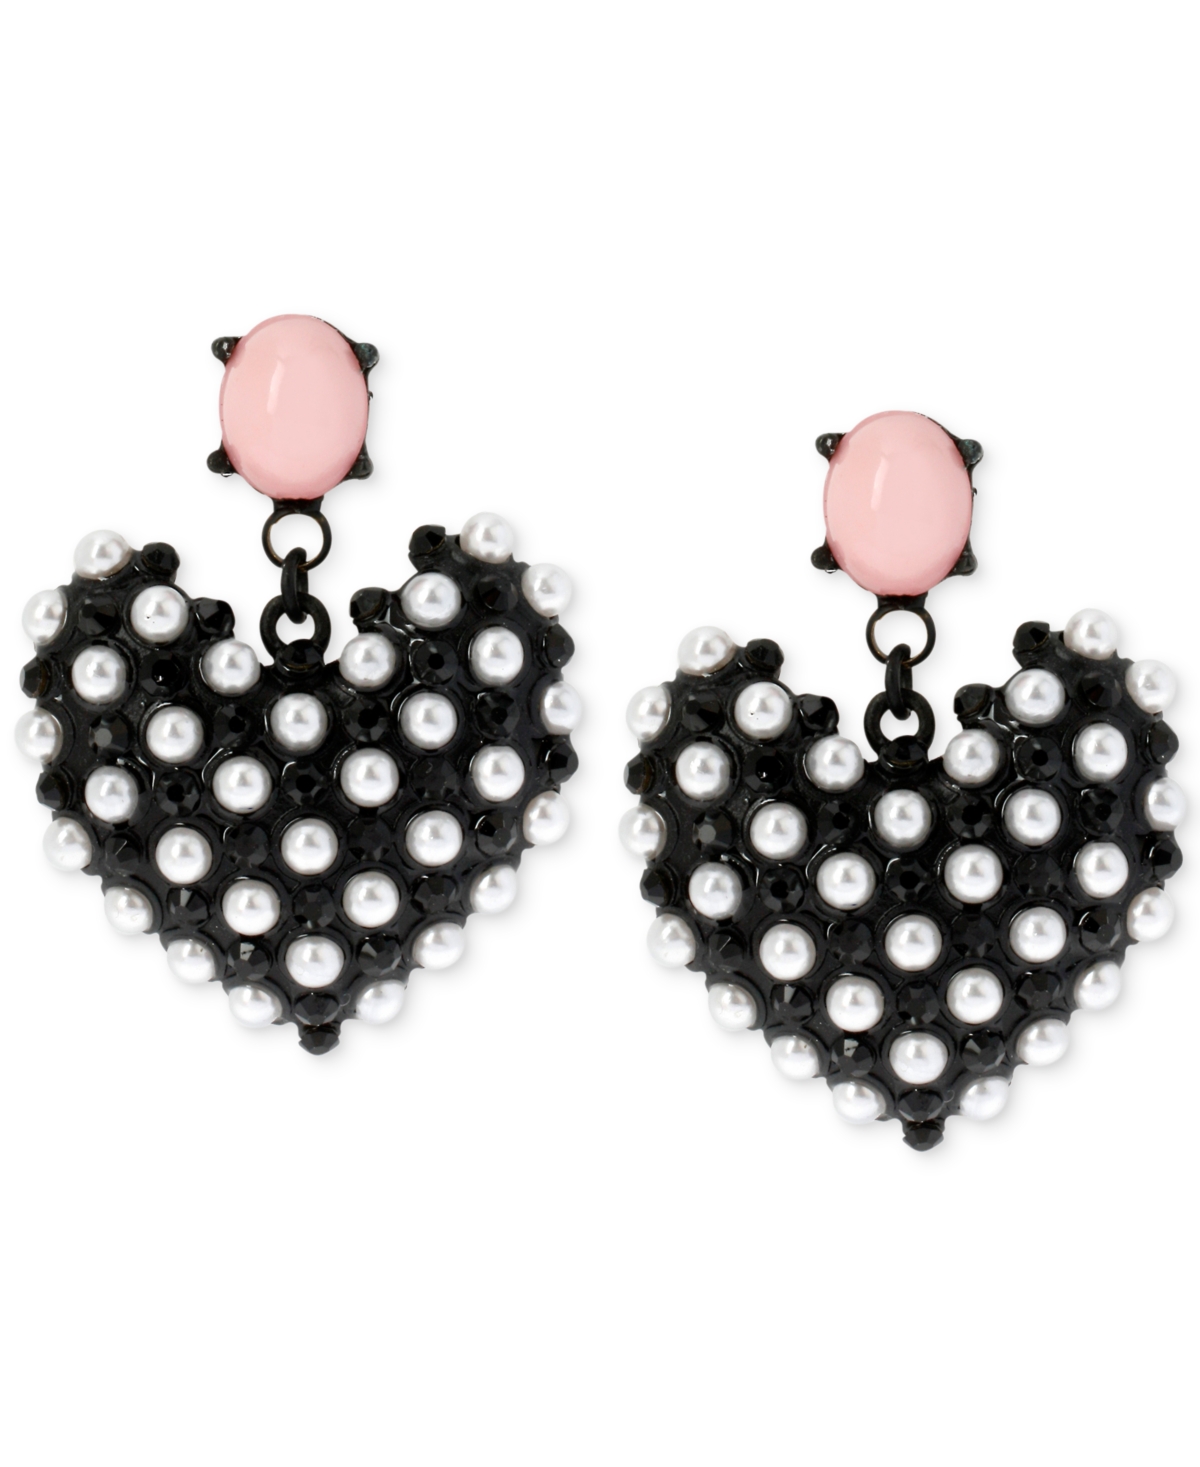 Black-Tone Imitation Pearl Heart Earrings - Black